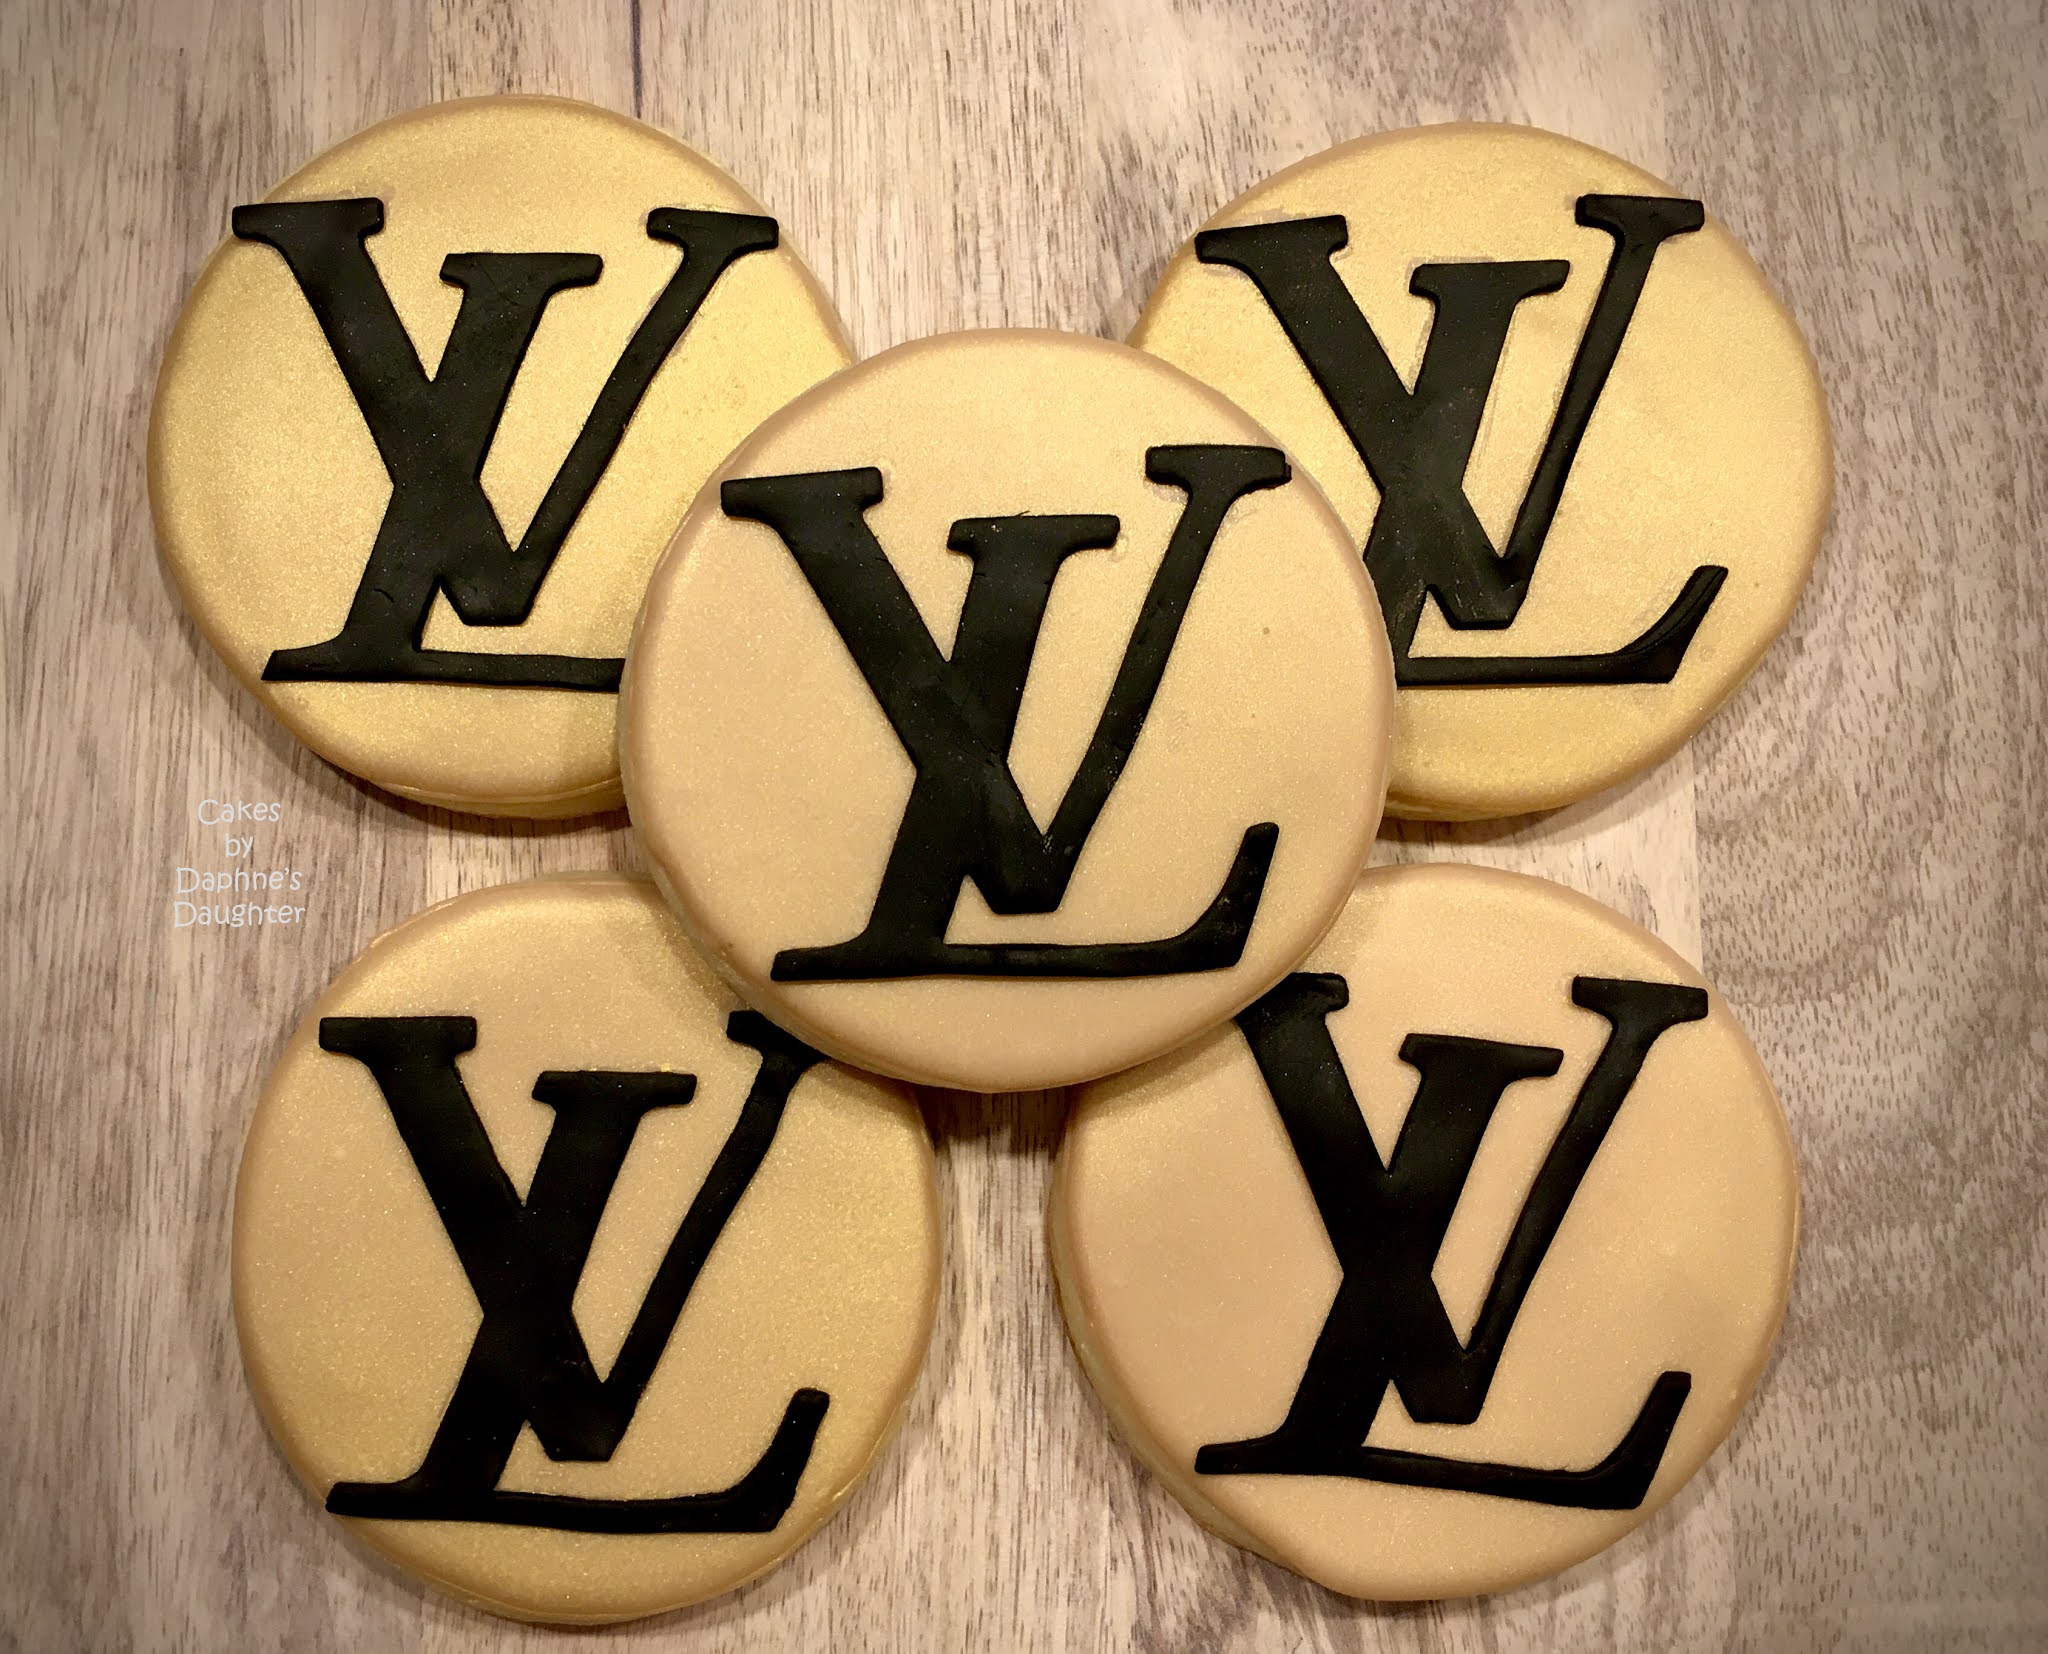 Louis Vuitton cookies  Chanel cookies, Birthday cookies, Louis